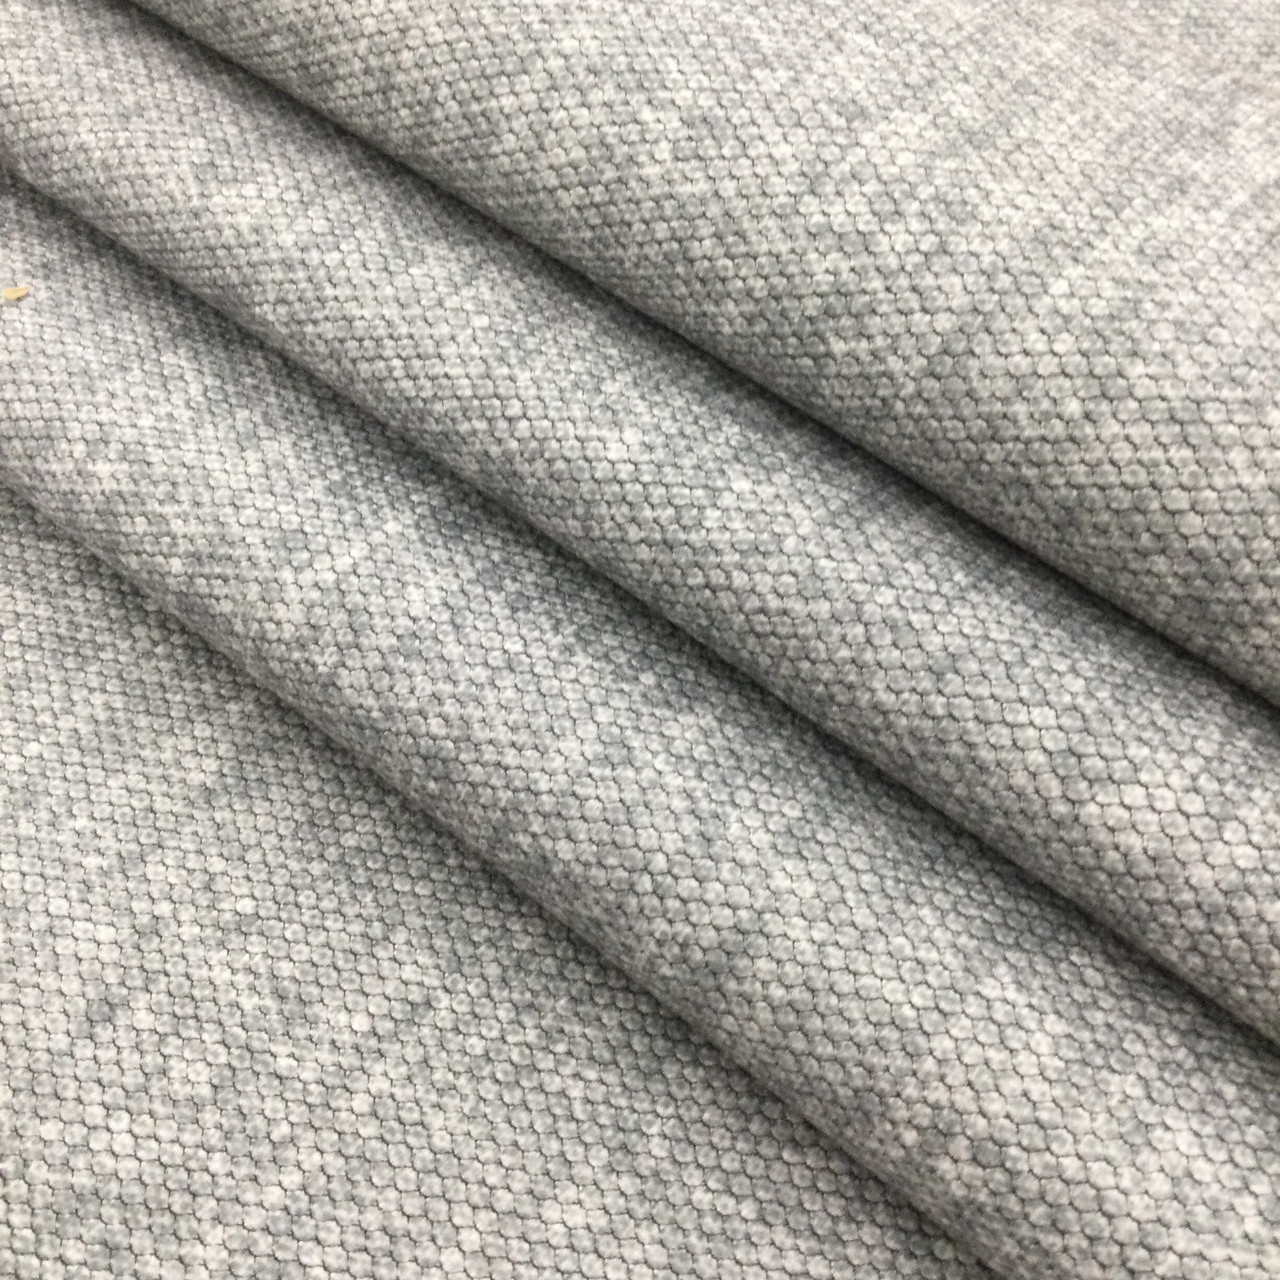 Micro Ogee in Steel Grey Microfiber Fabric, Upholstery